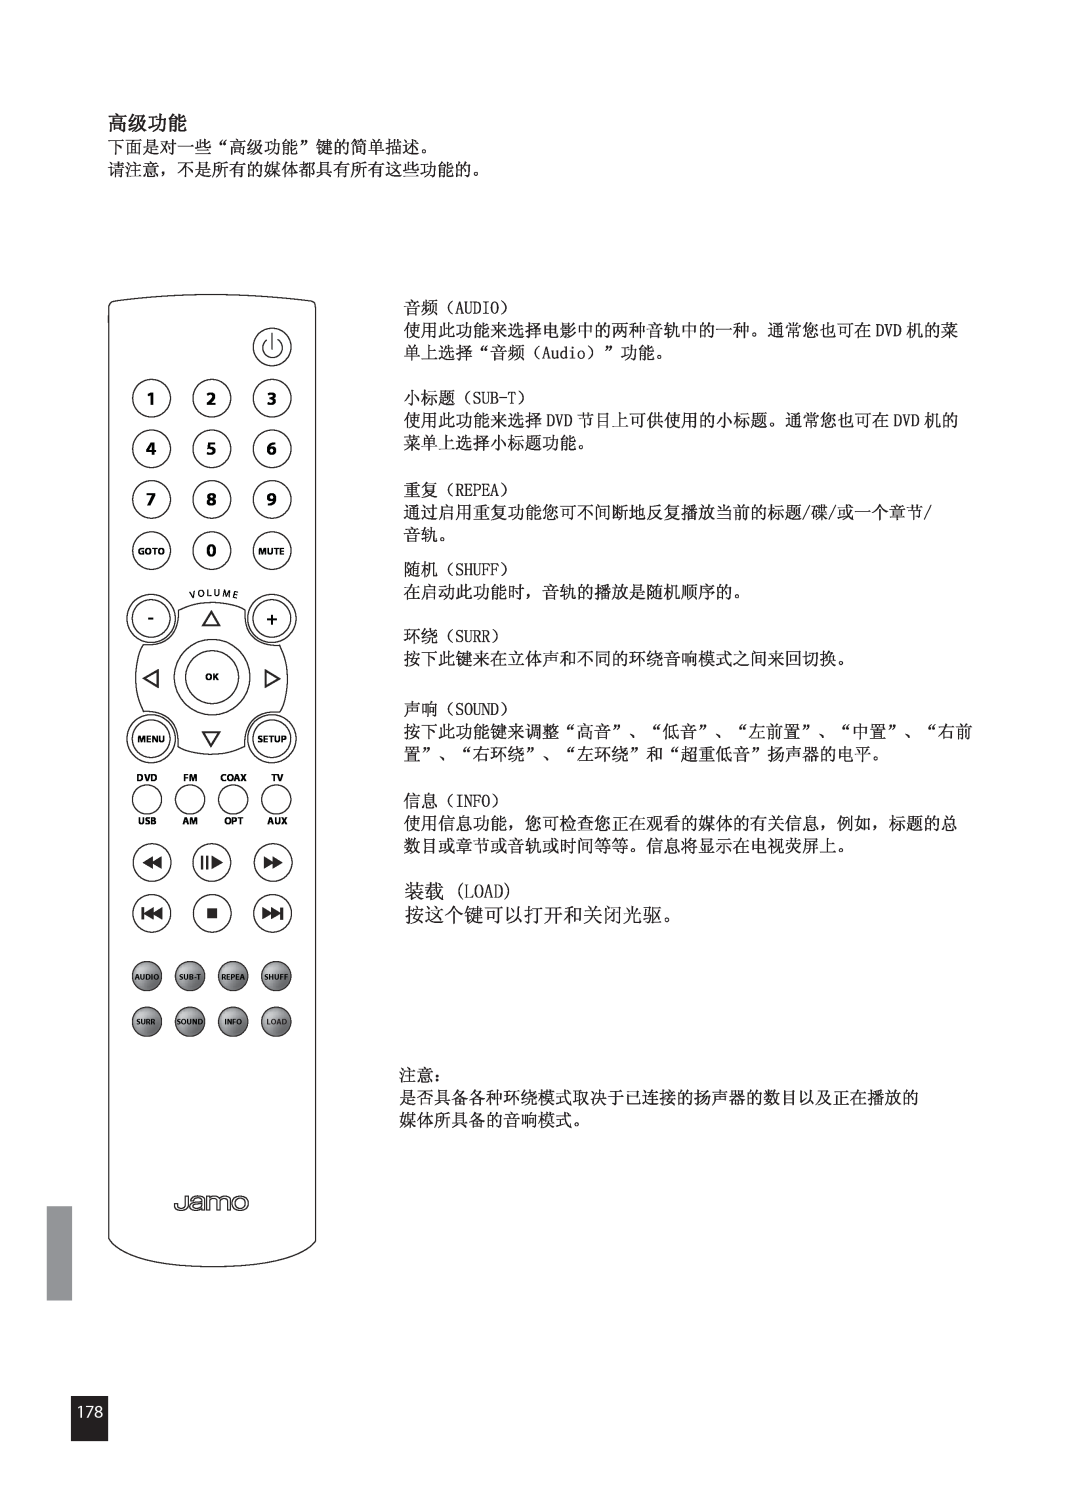 JAMO DMR 61 manual 装载 Load 按这个键可以打开和关闭光驱。, 1 2 4 5 7 8, GOTO 0 MUTE, Ok Menusetup Dvd Fm Coax Tv Usb Am Opt Aux 